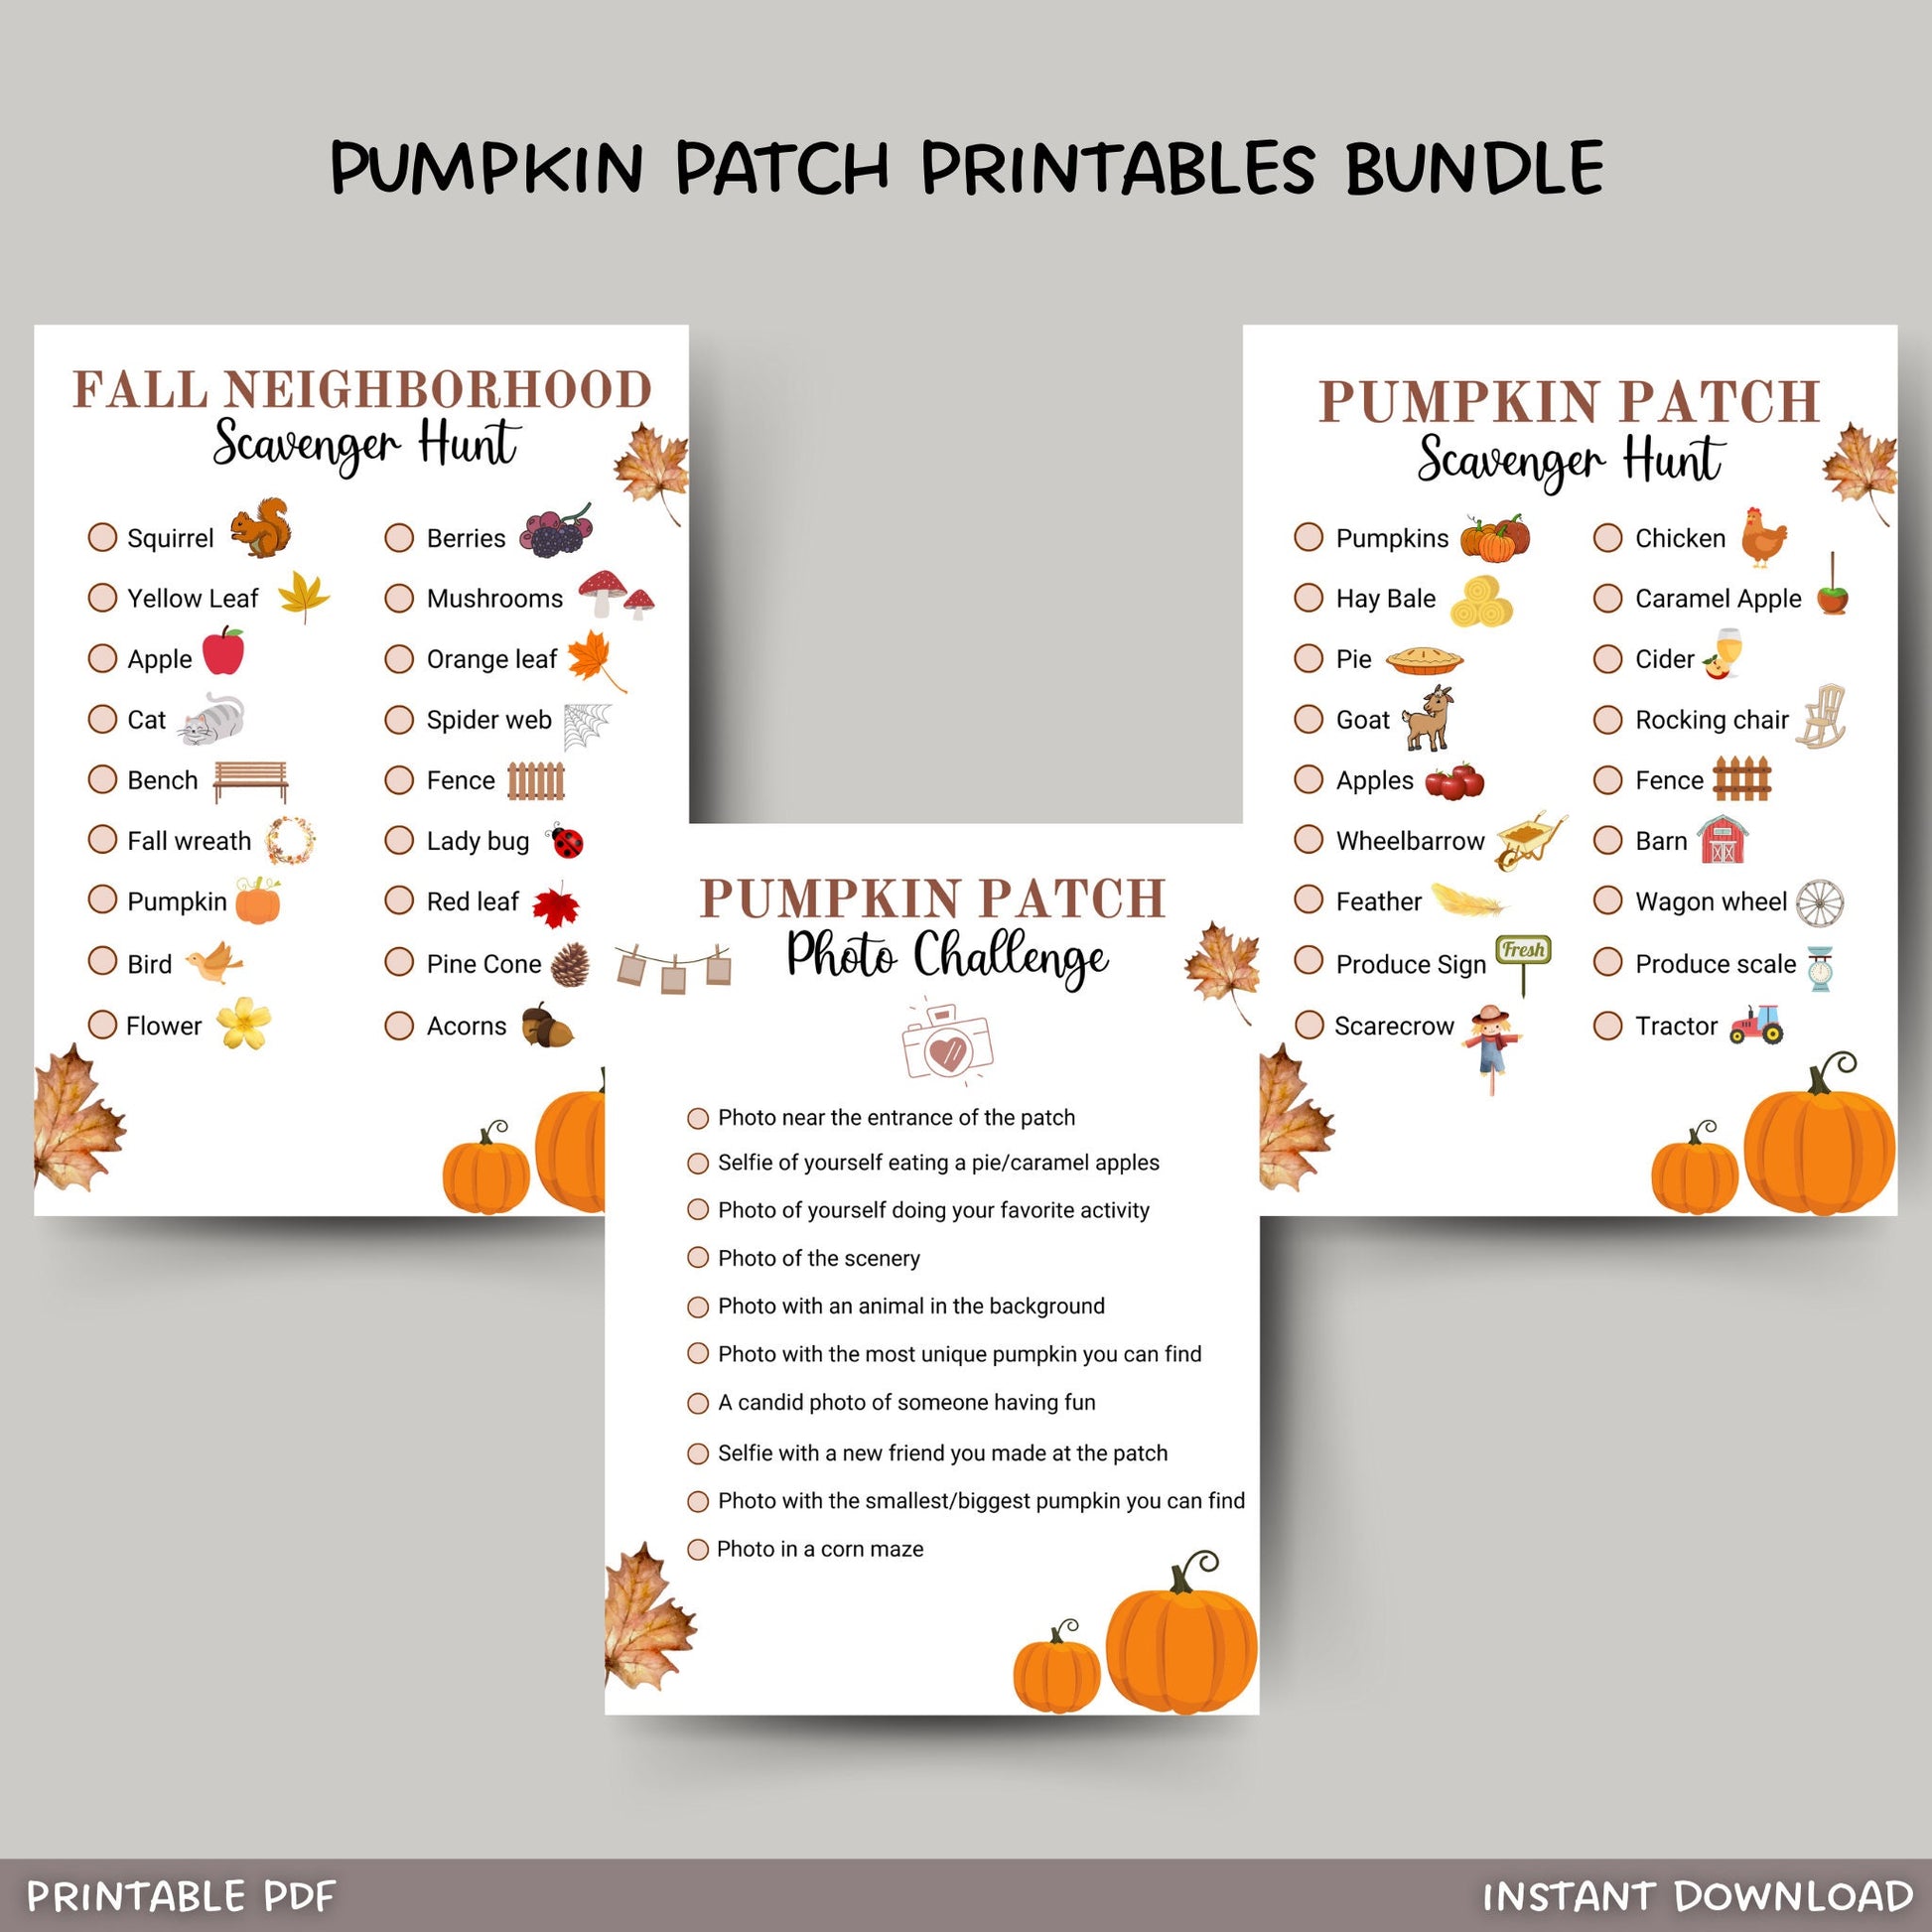 Pumpkin Patch Scavenger Hunt Printable, Fall Neighborhood Scavenger Hunt, Pumpkin Patch Photo Challenge, Fall Outdoors Scavenger Hunt Kids